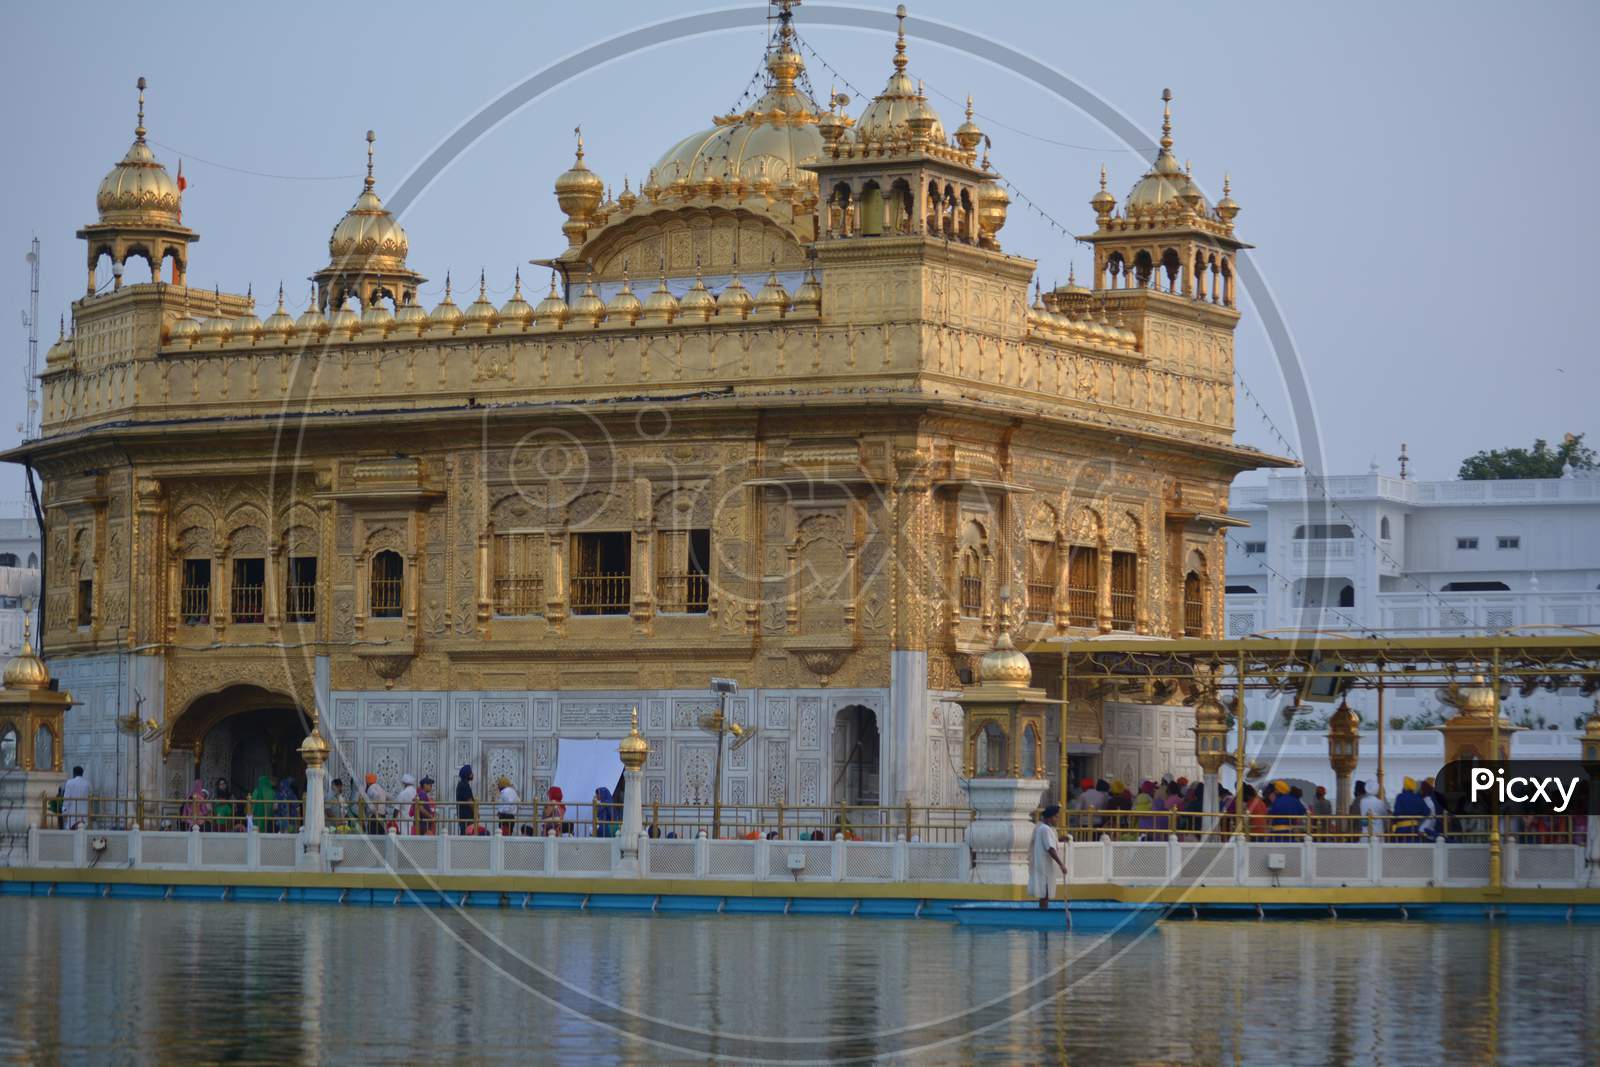 The Golden Temple, Amritsar